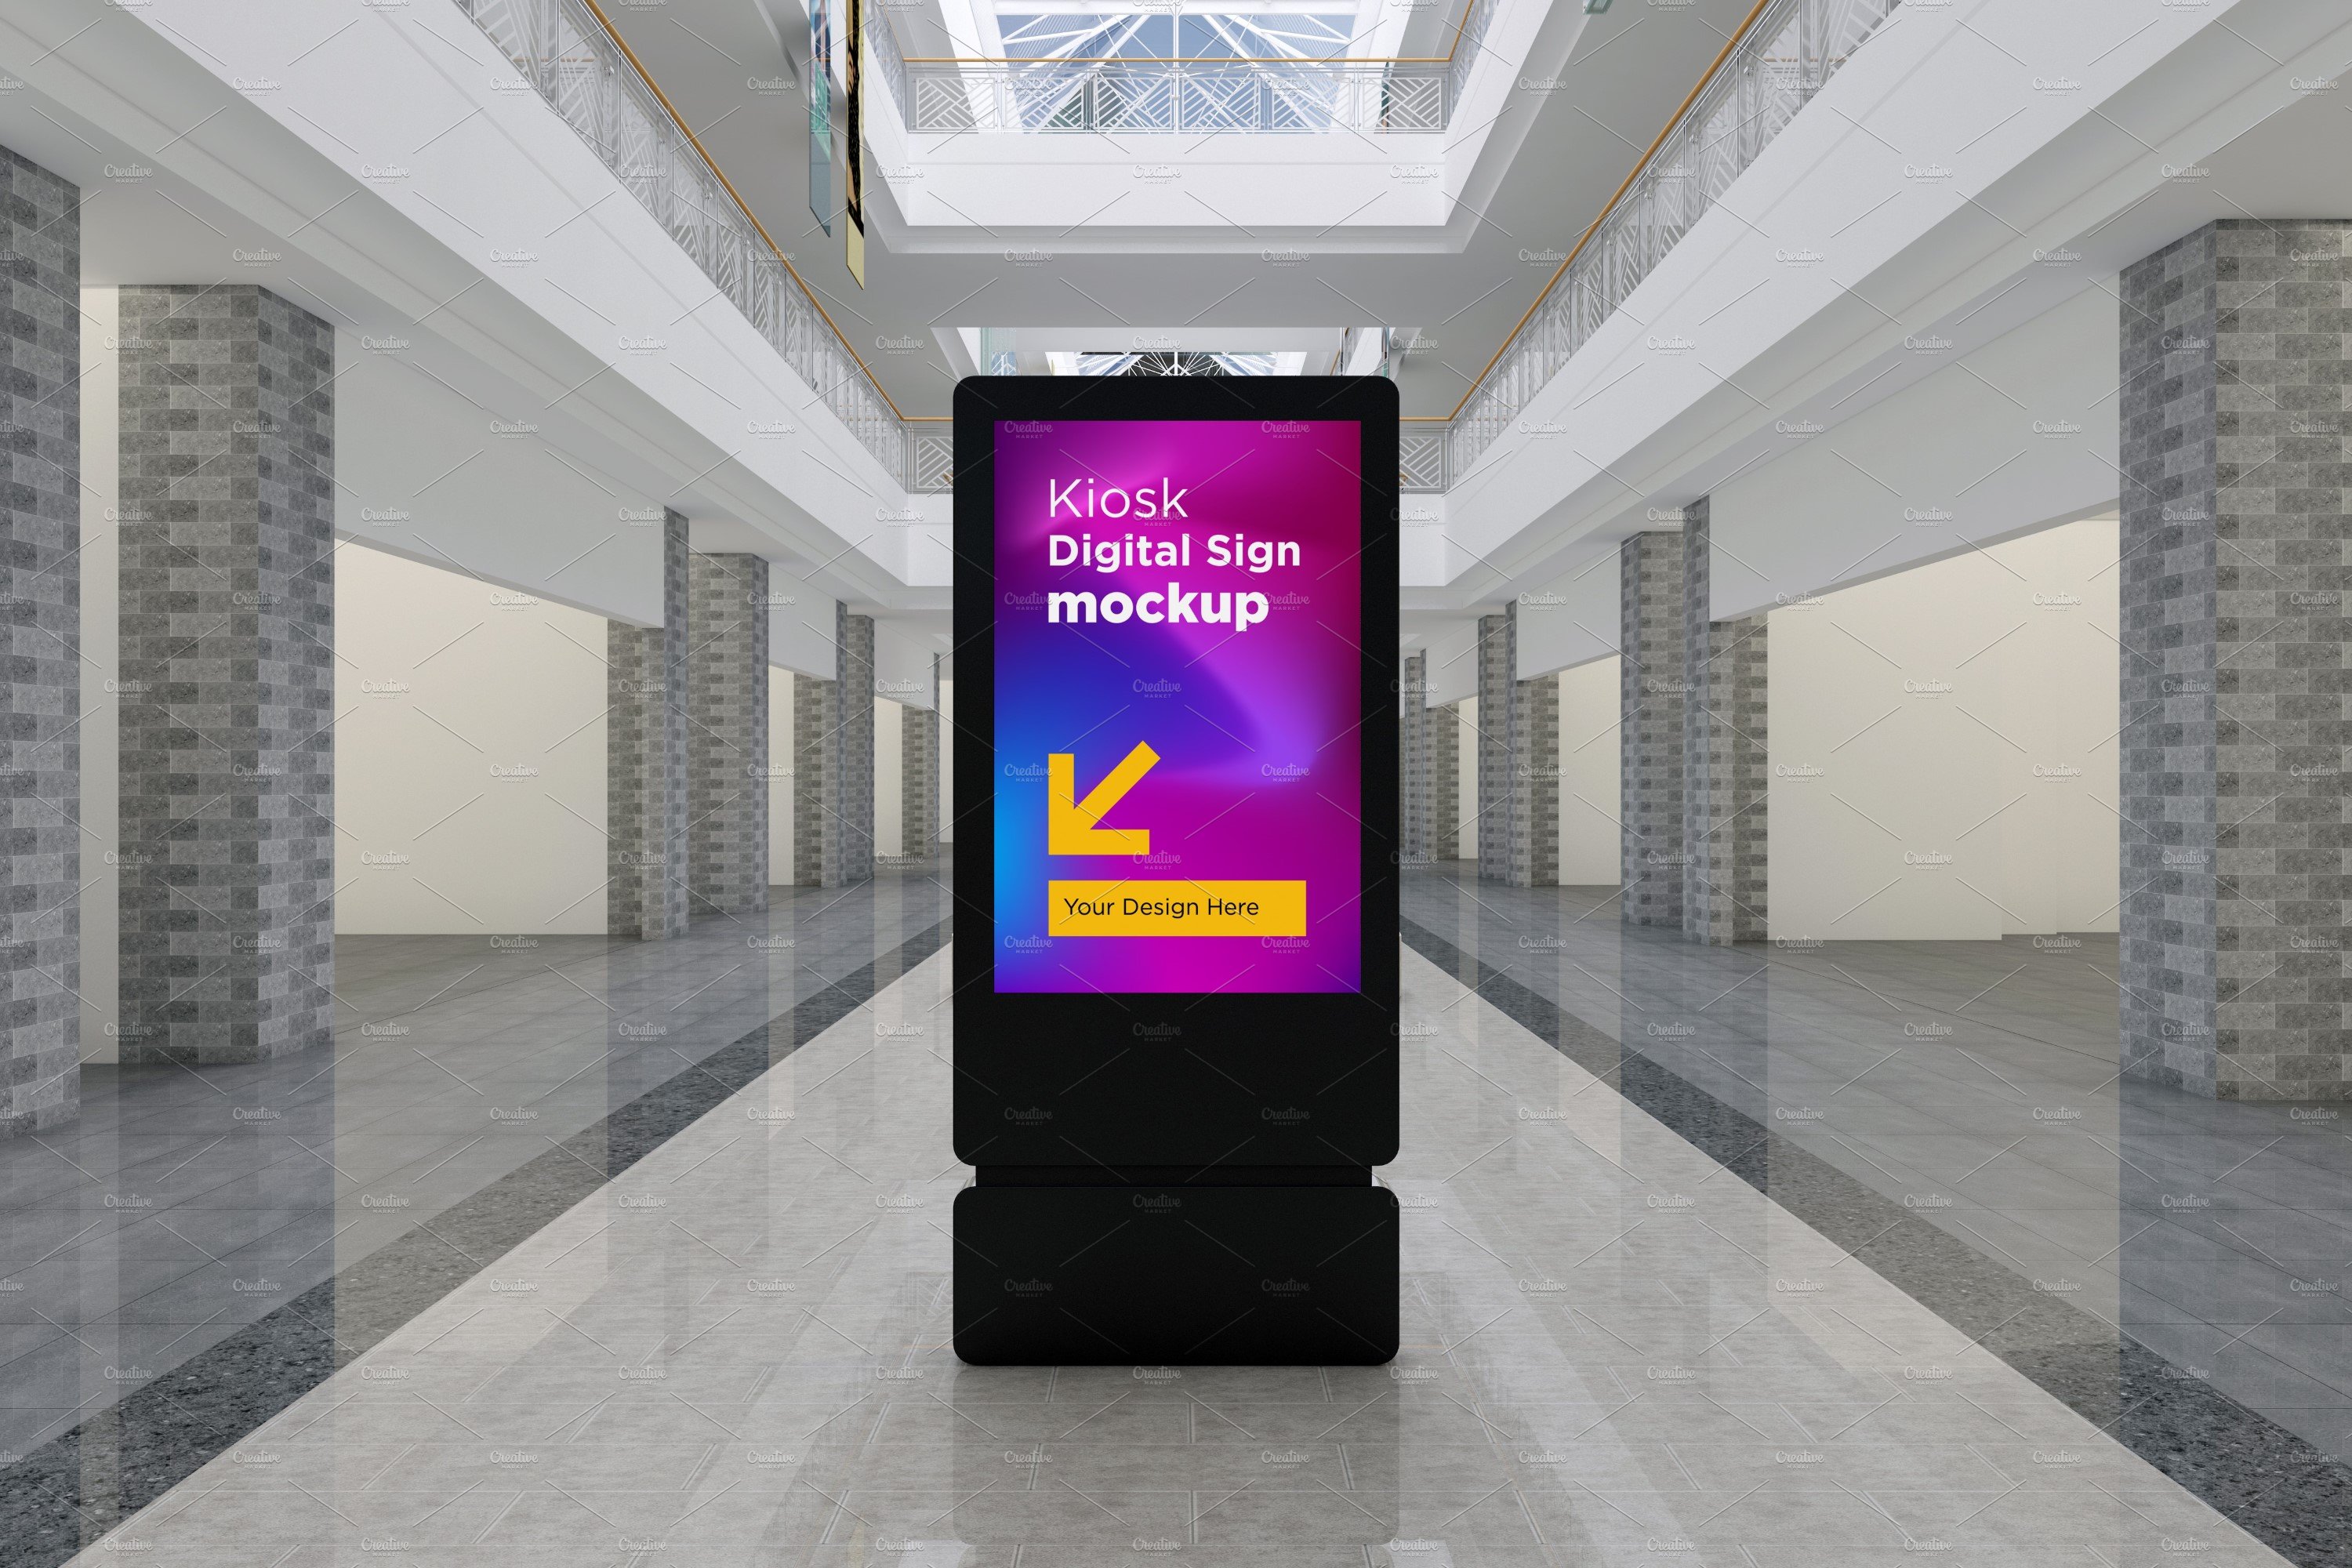 Kiosk Digital Sign Mockup cover image.